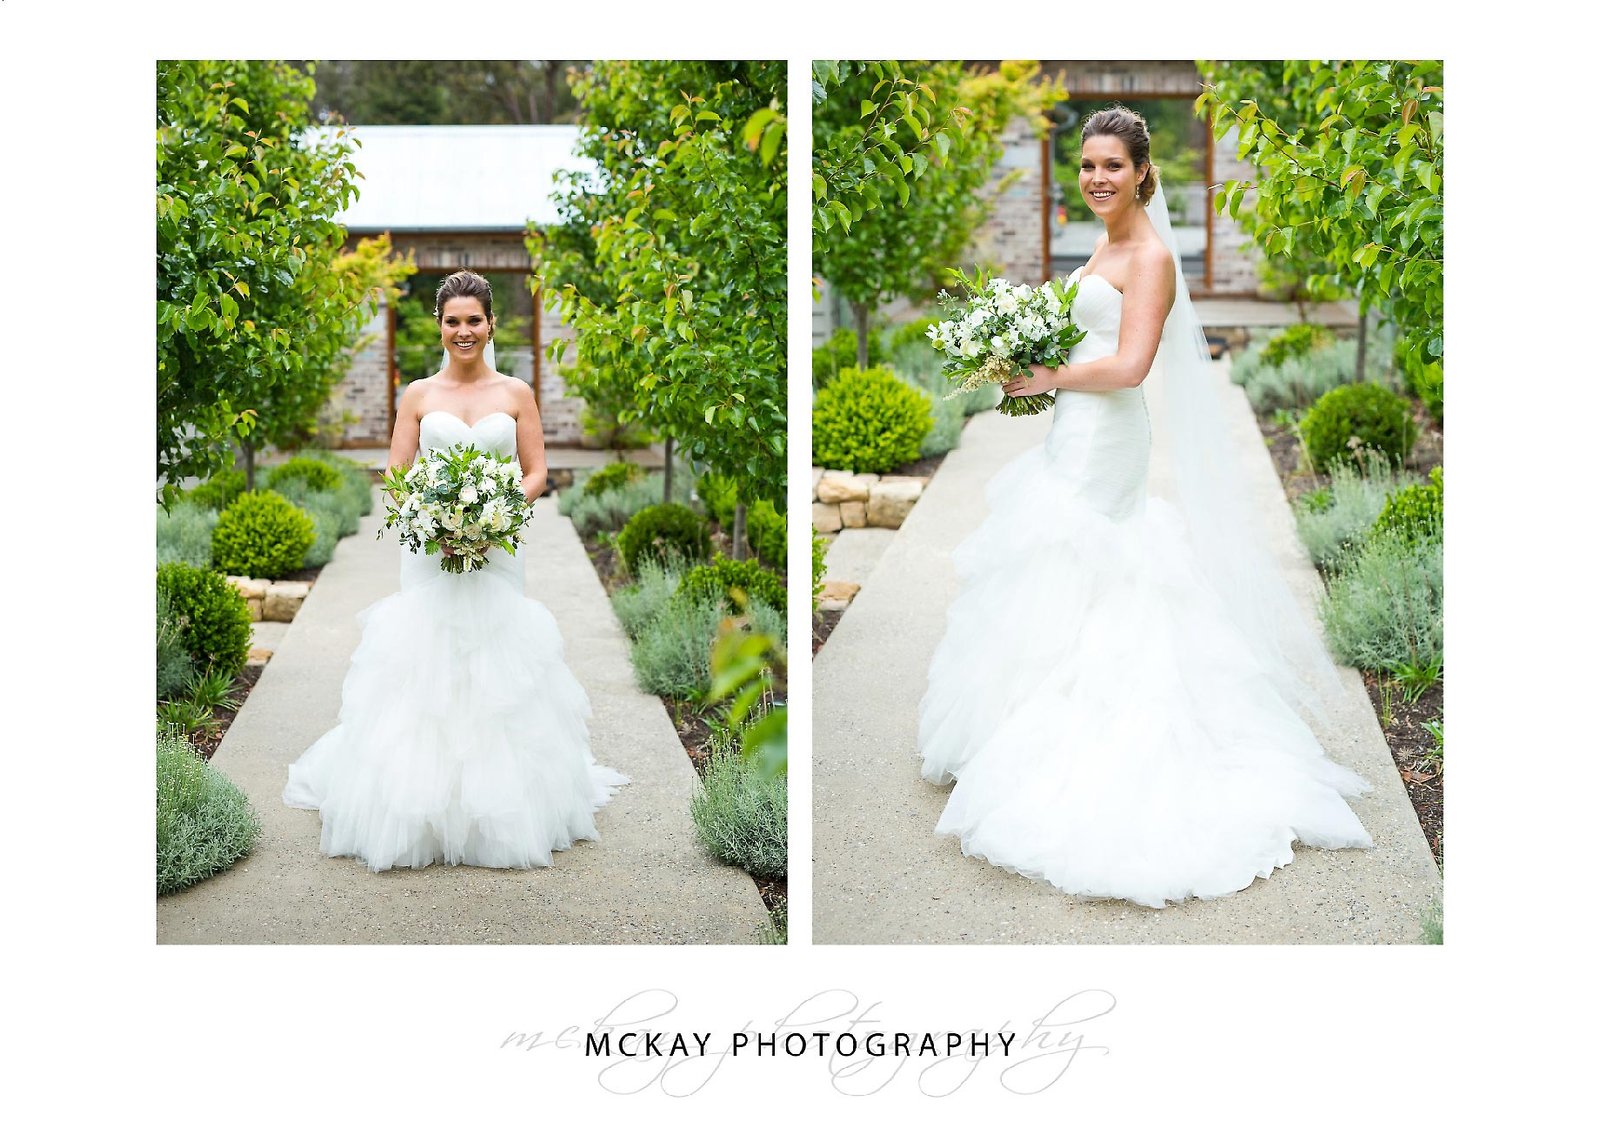 Bride wedding dress detail and portrait photo